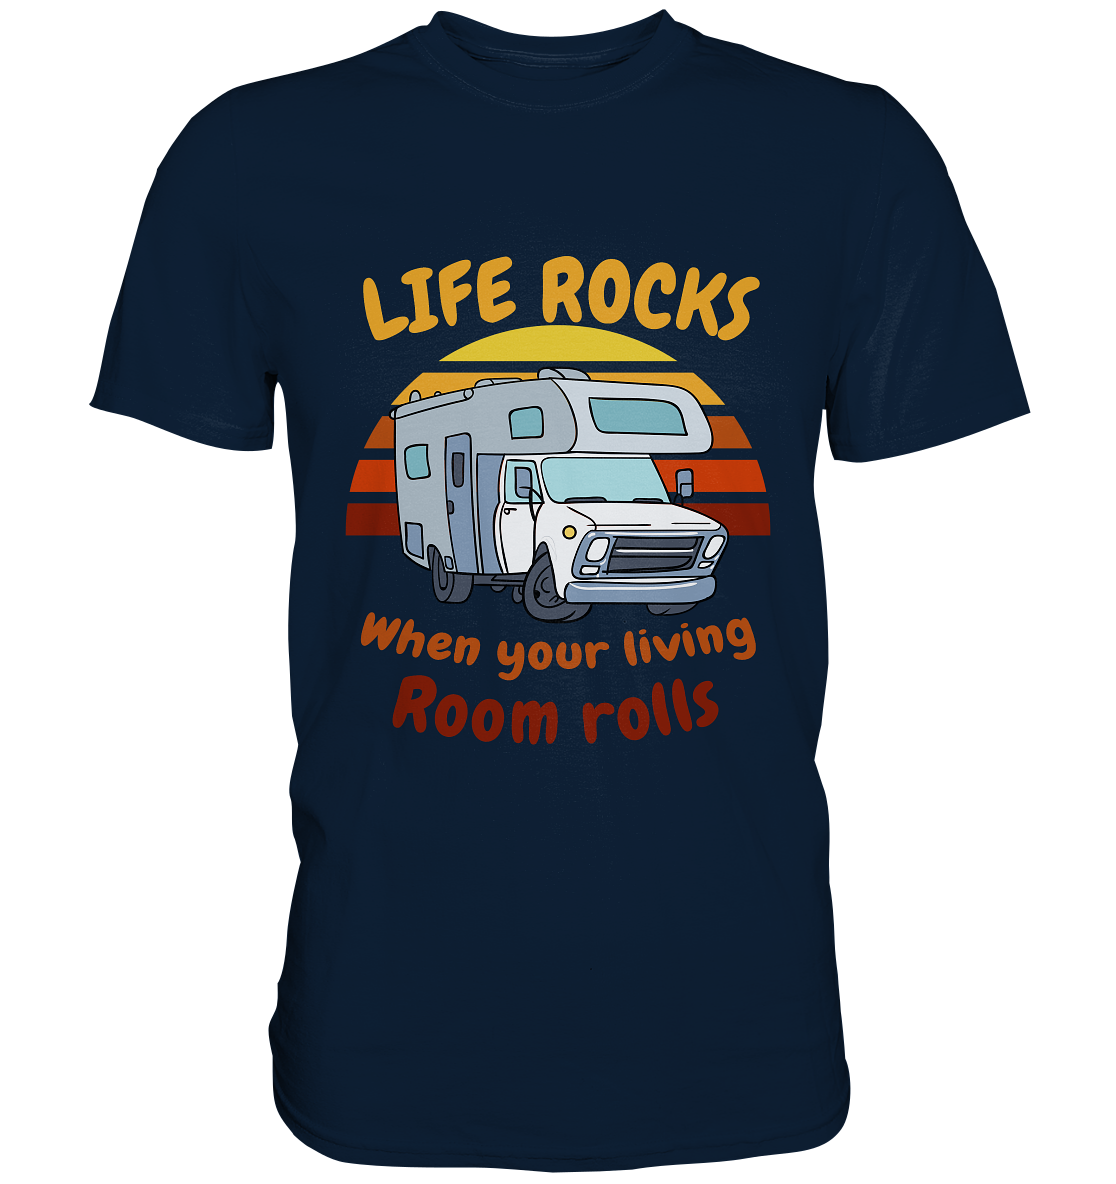 Life rocks when your living roosm rolls. Camping - Premium Shirt